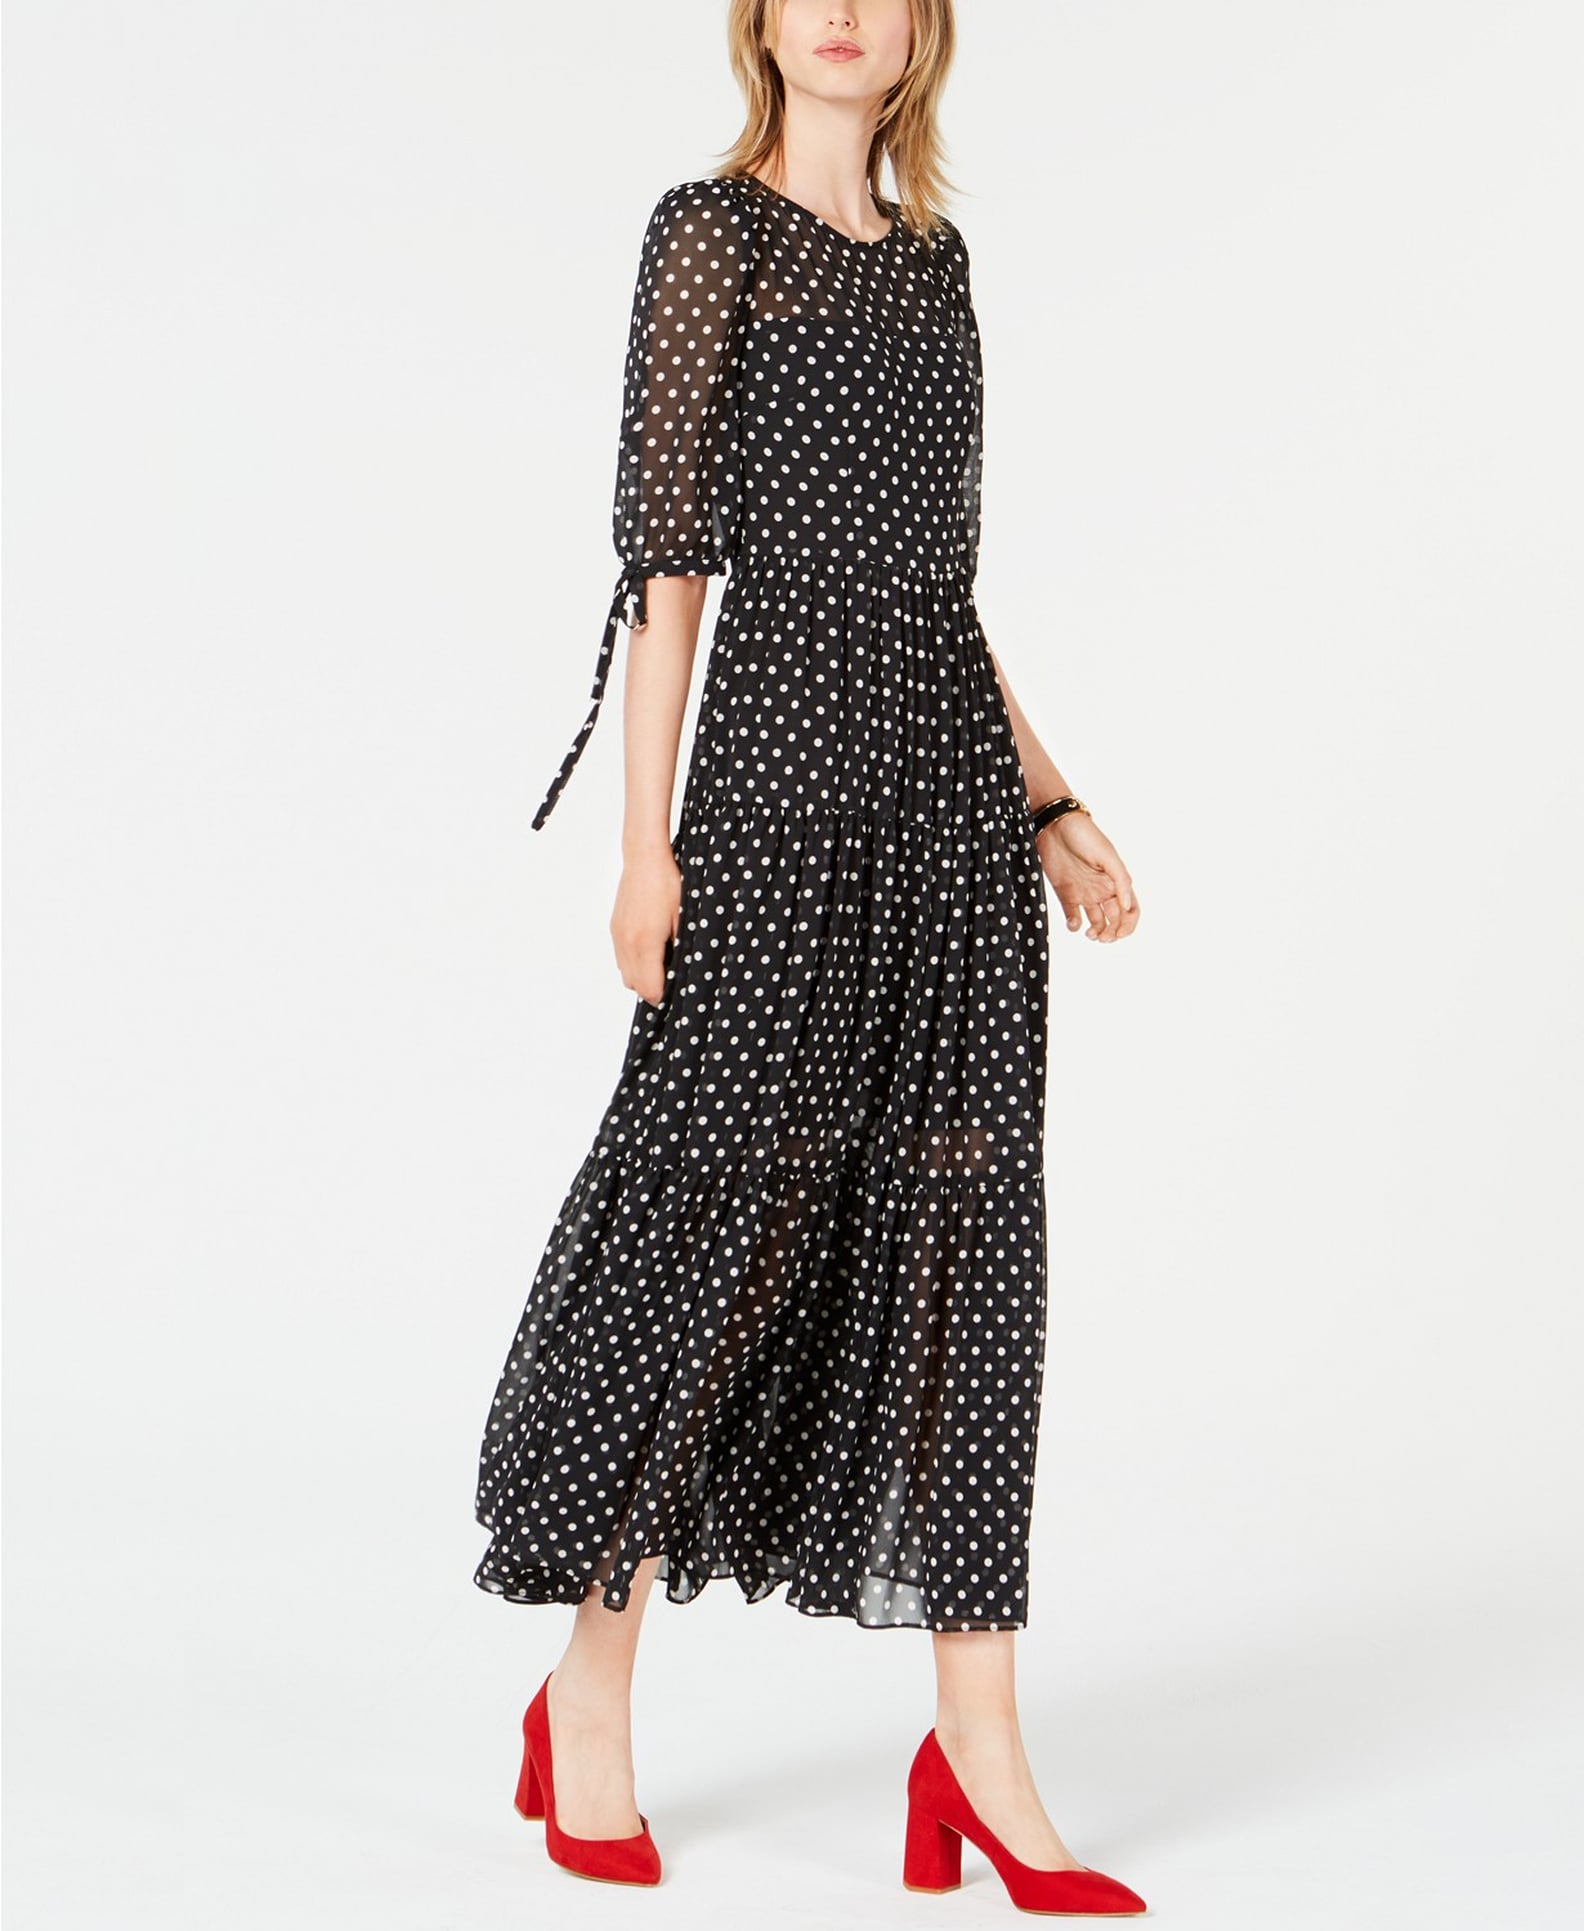 Dresses on Sale at Macy's 2019 | POPSUGAR Fashion